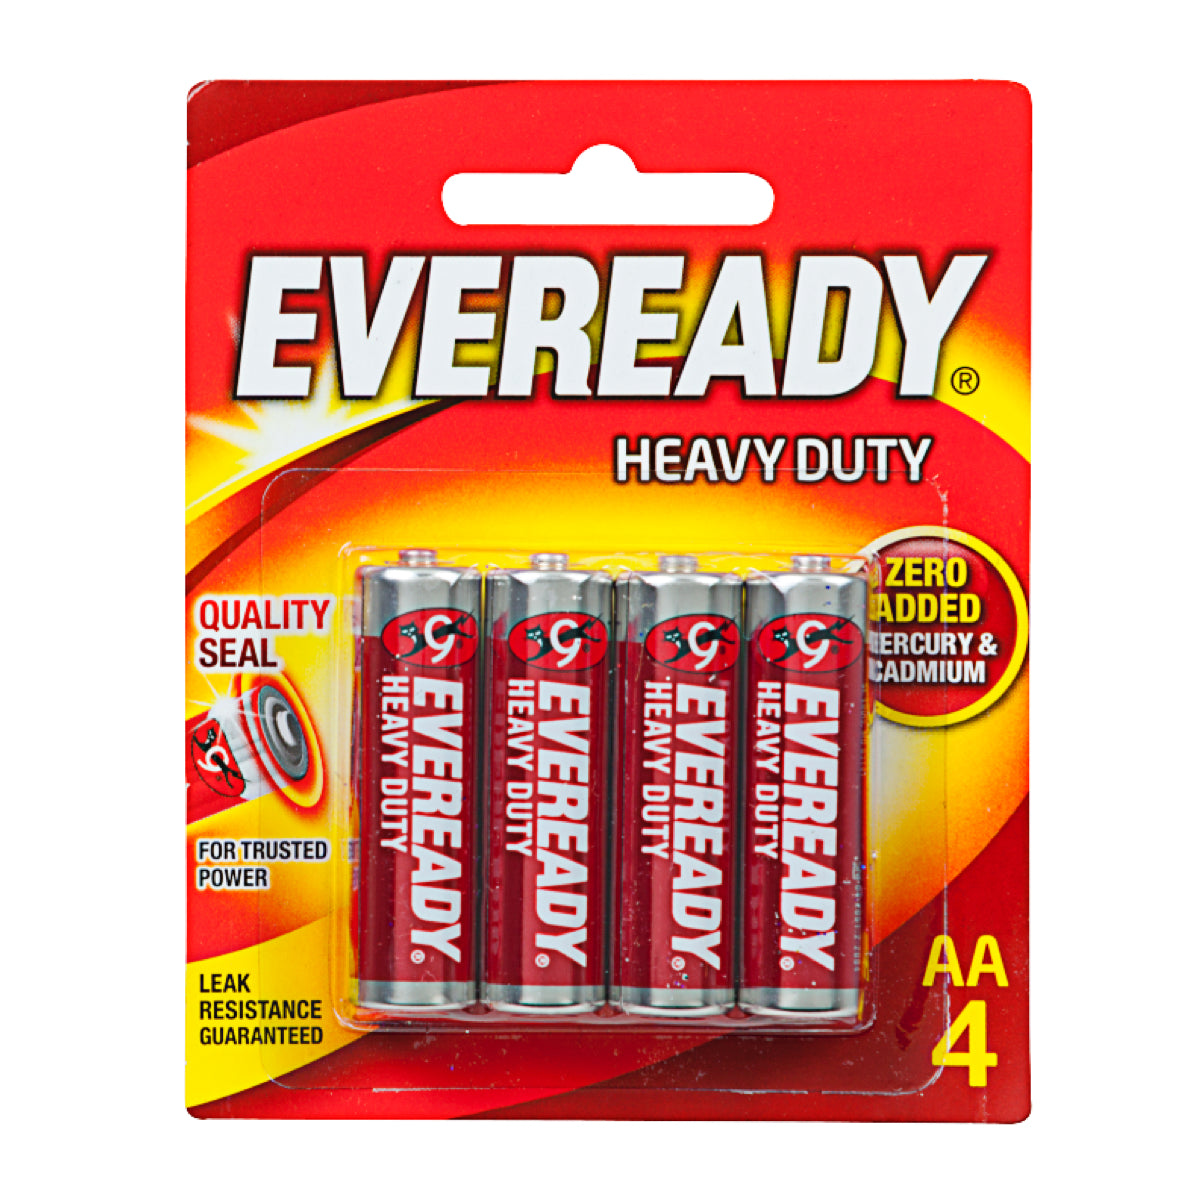 Eveready AA Heavy Duty Batteries 4pk